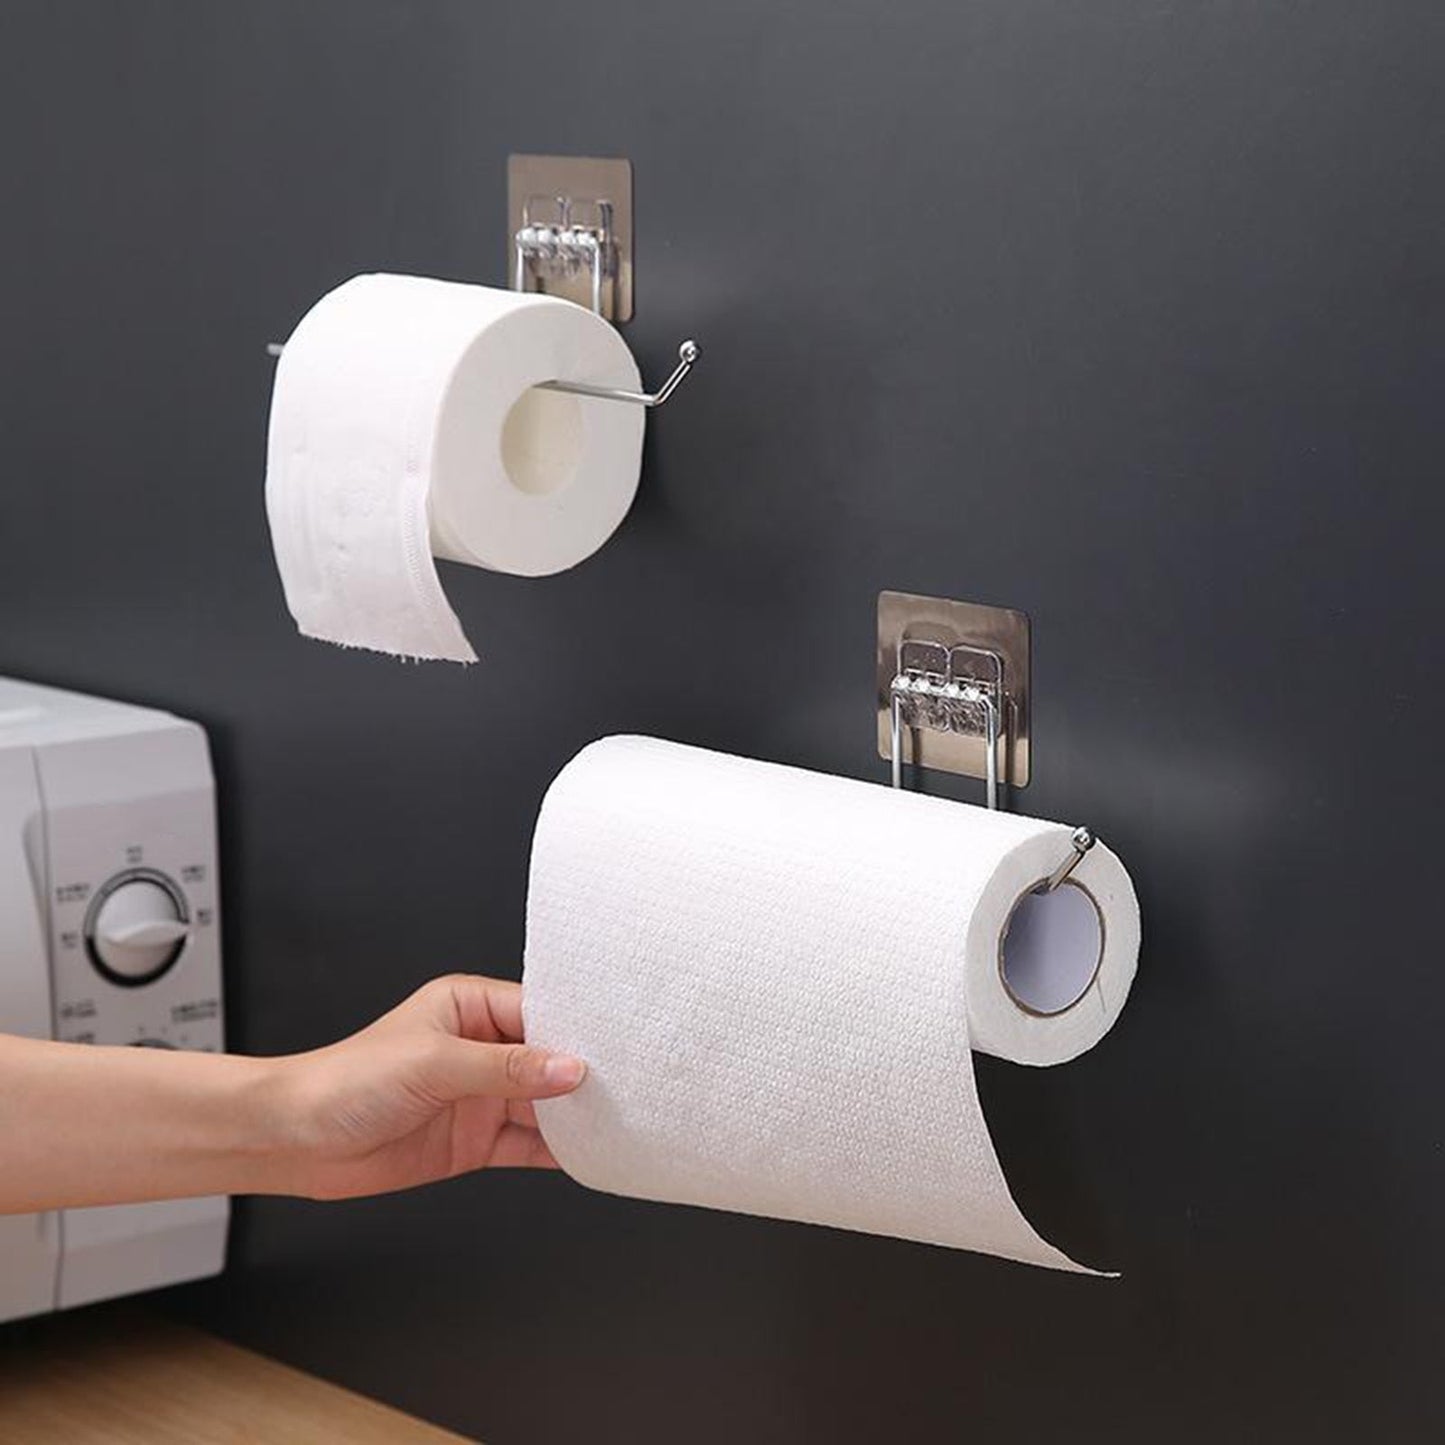 HULIANFU Toilet Paper Towel Holder Stainless Steel Self Adhesive on Smooth Surfaces